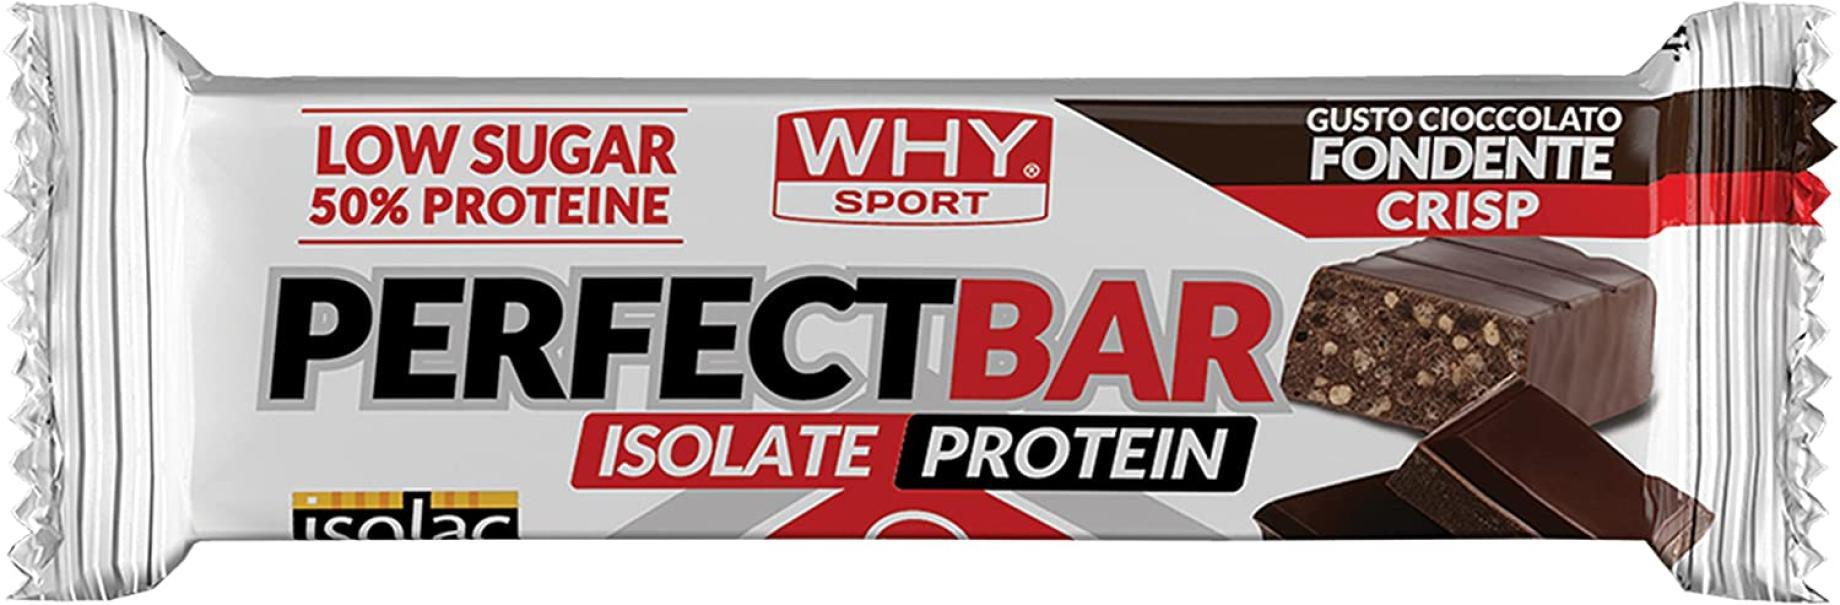 why sport why sport perfect bar - 28 barrette proteiche con proteine isolate - snack proteici - gusto biancociok crisp - 50 gr